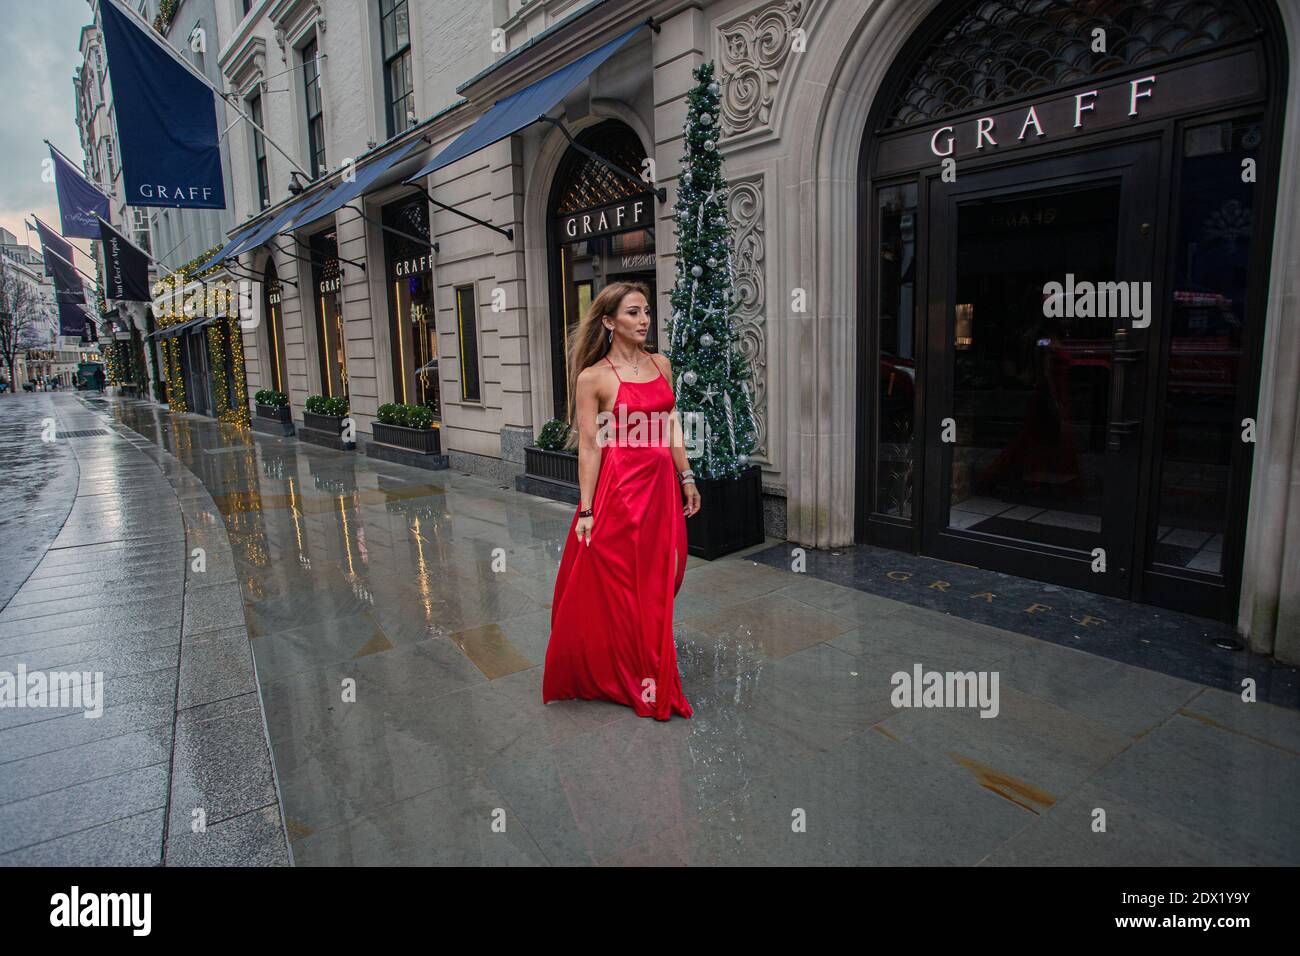 Great Britain /London / Mary Yan Instagram Influencer gets her photos taken walking in red dress in Bond Street on December 23, 2020 in London. Stock Photo